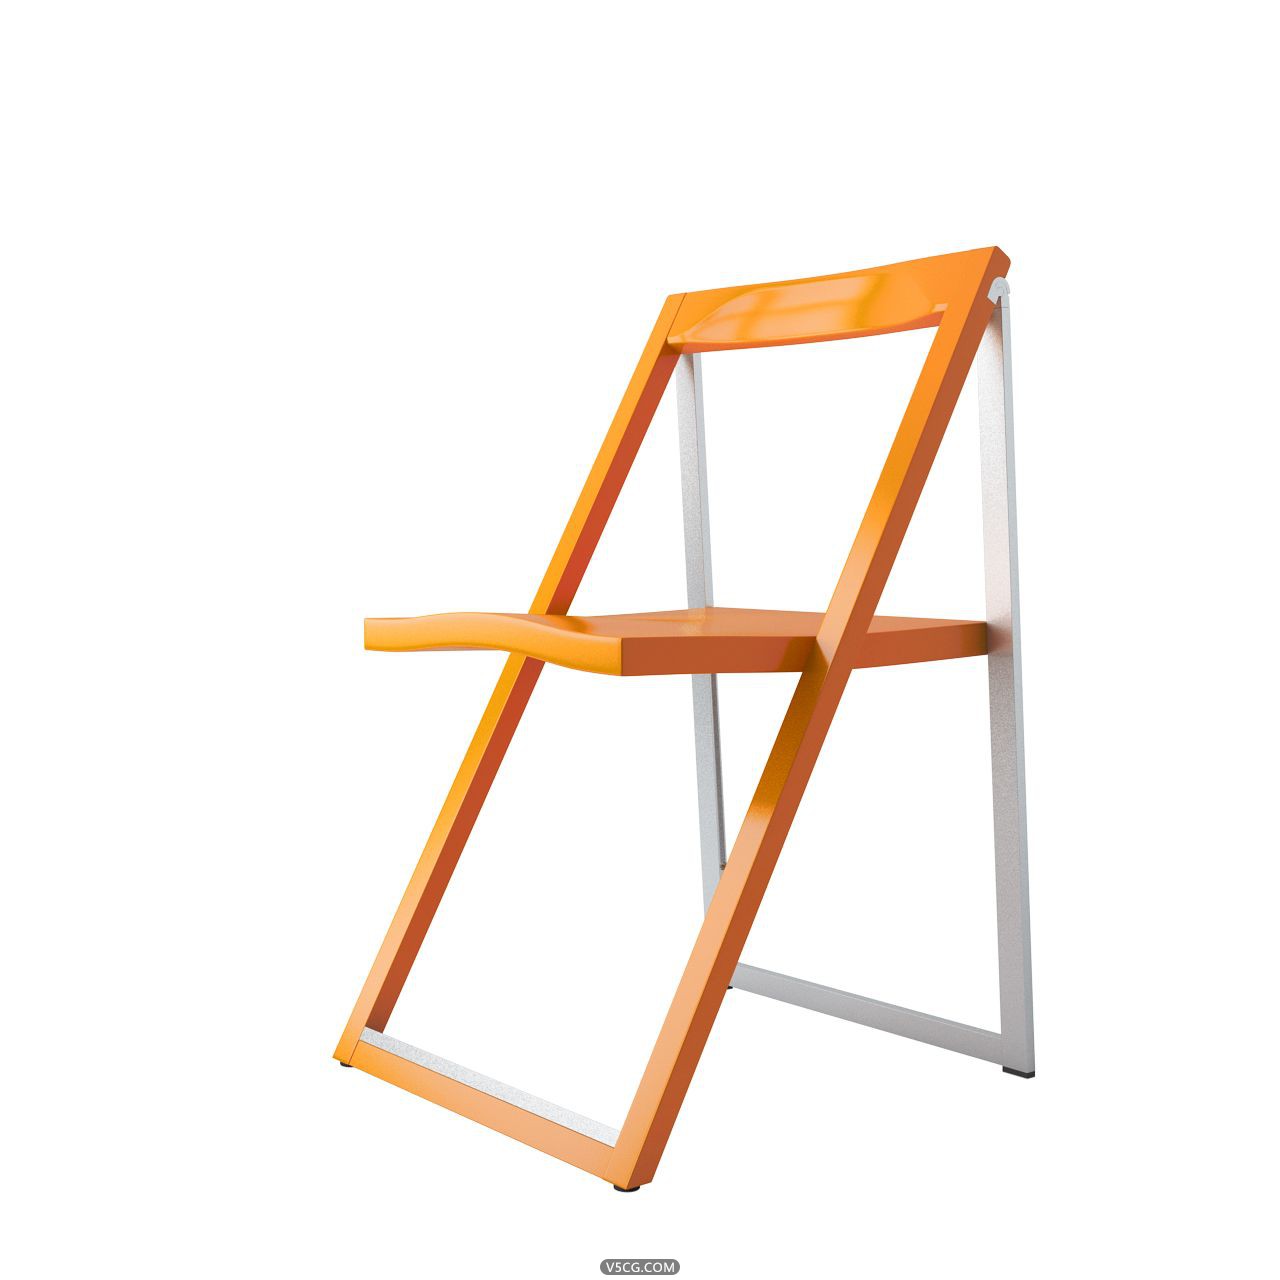 skip-folding-chair-by-calligaris.jpg